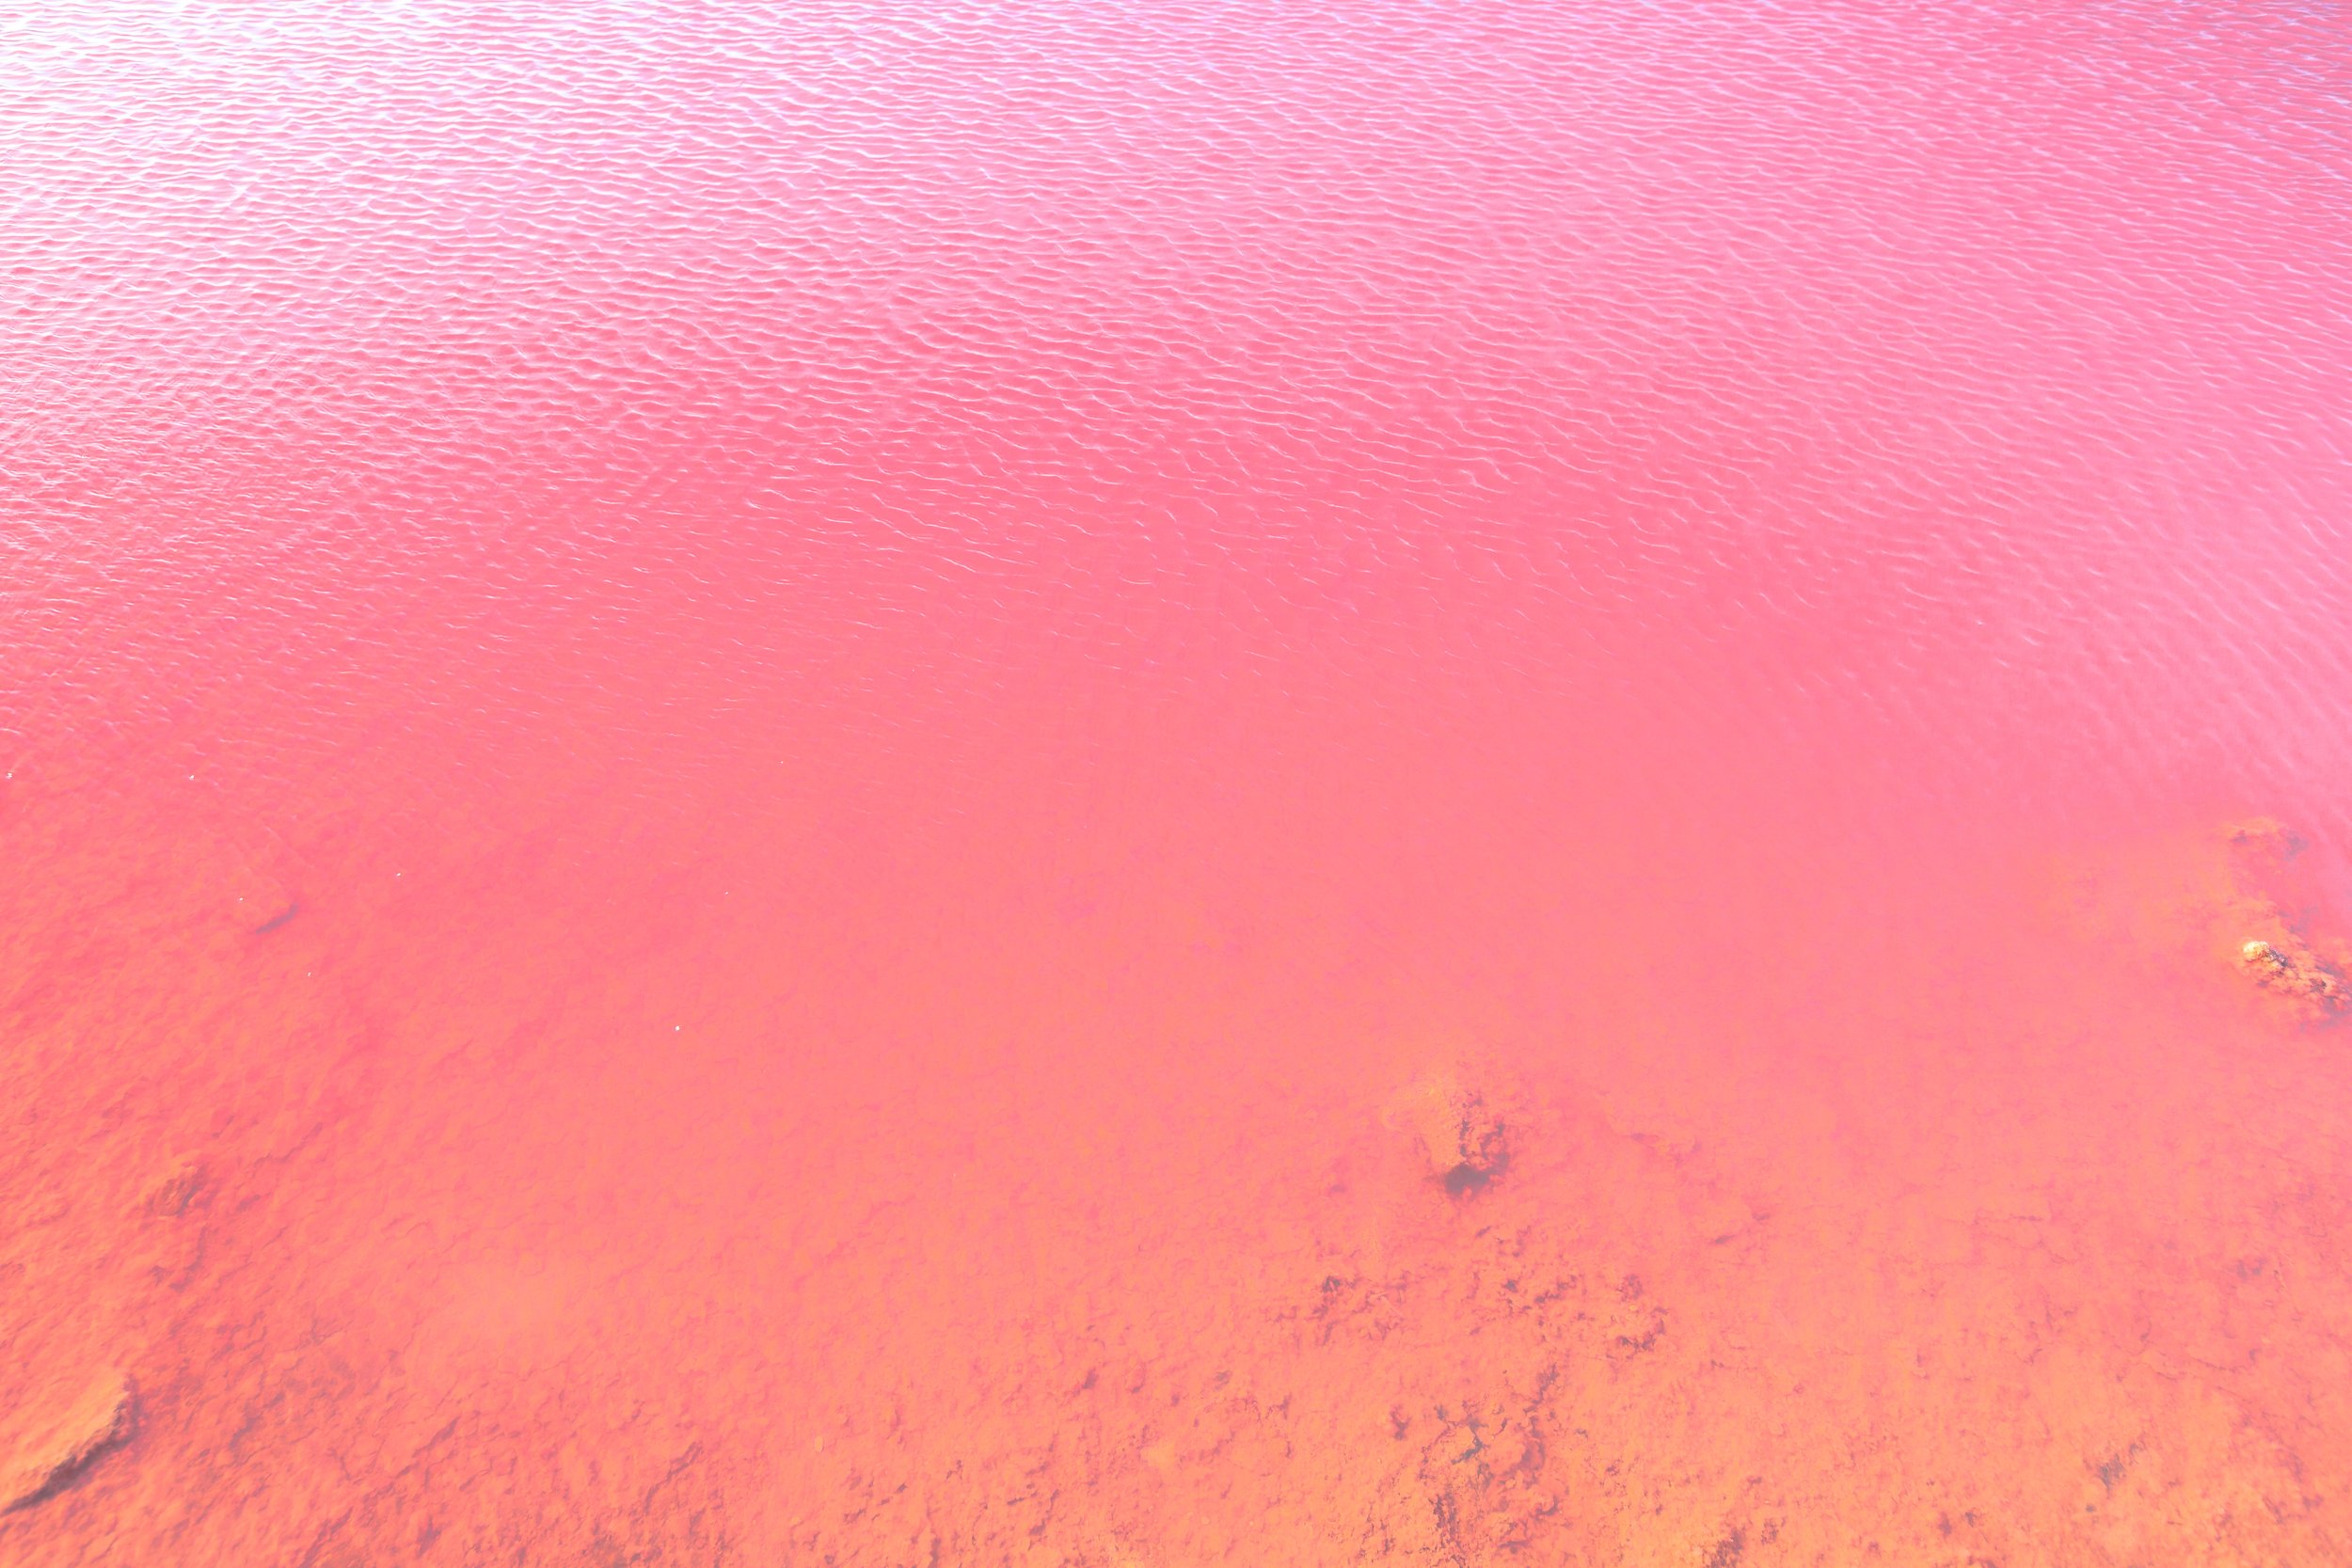 Pink Lake with Pink Microalgae in Gregory, Western Australia low res .jpg